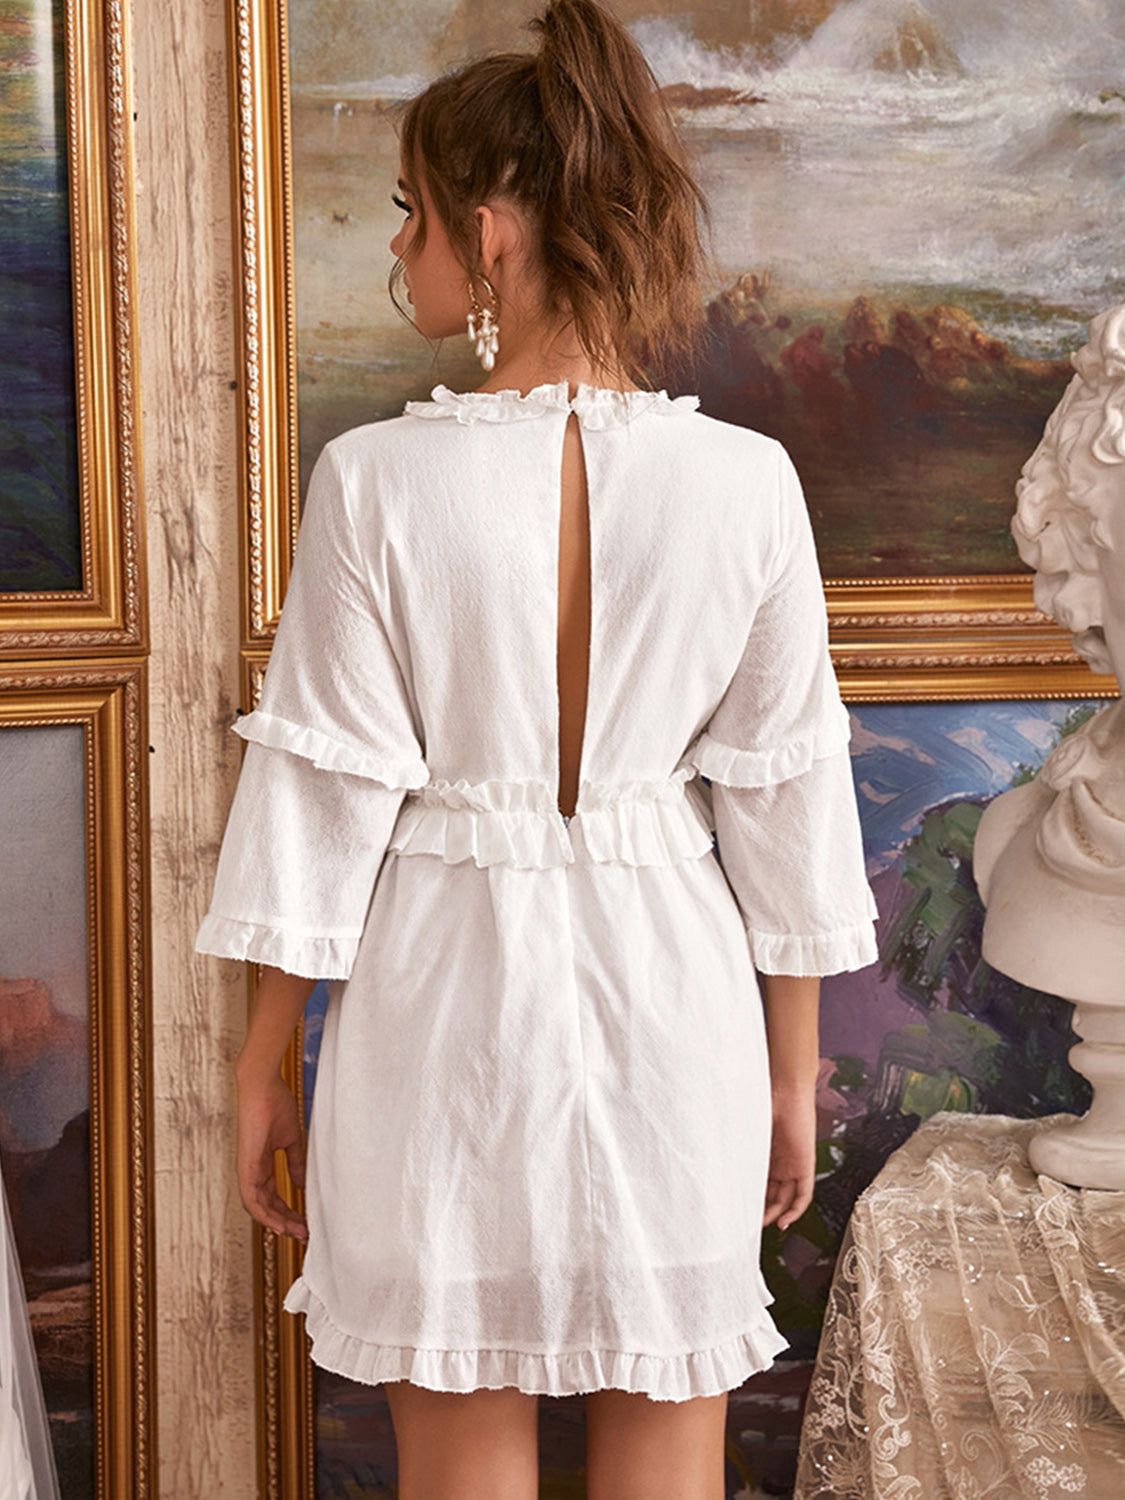 TEEK - White Ruffled V-Neck Mini Dress DRESS TEEK Trend   